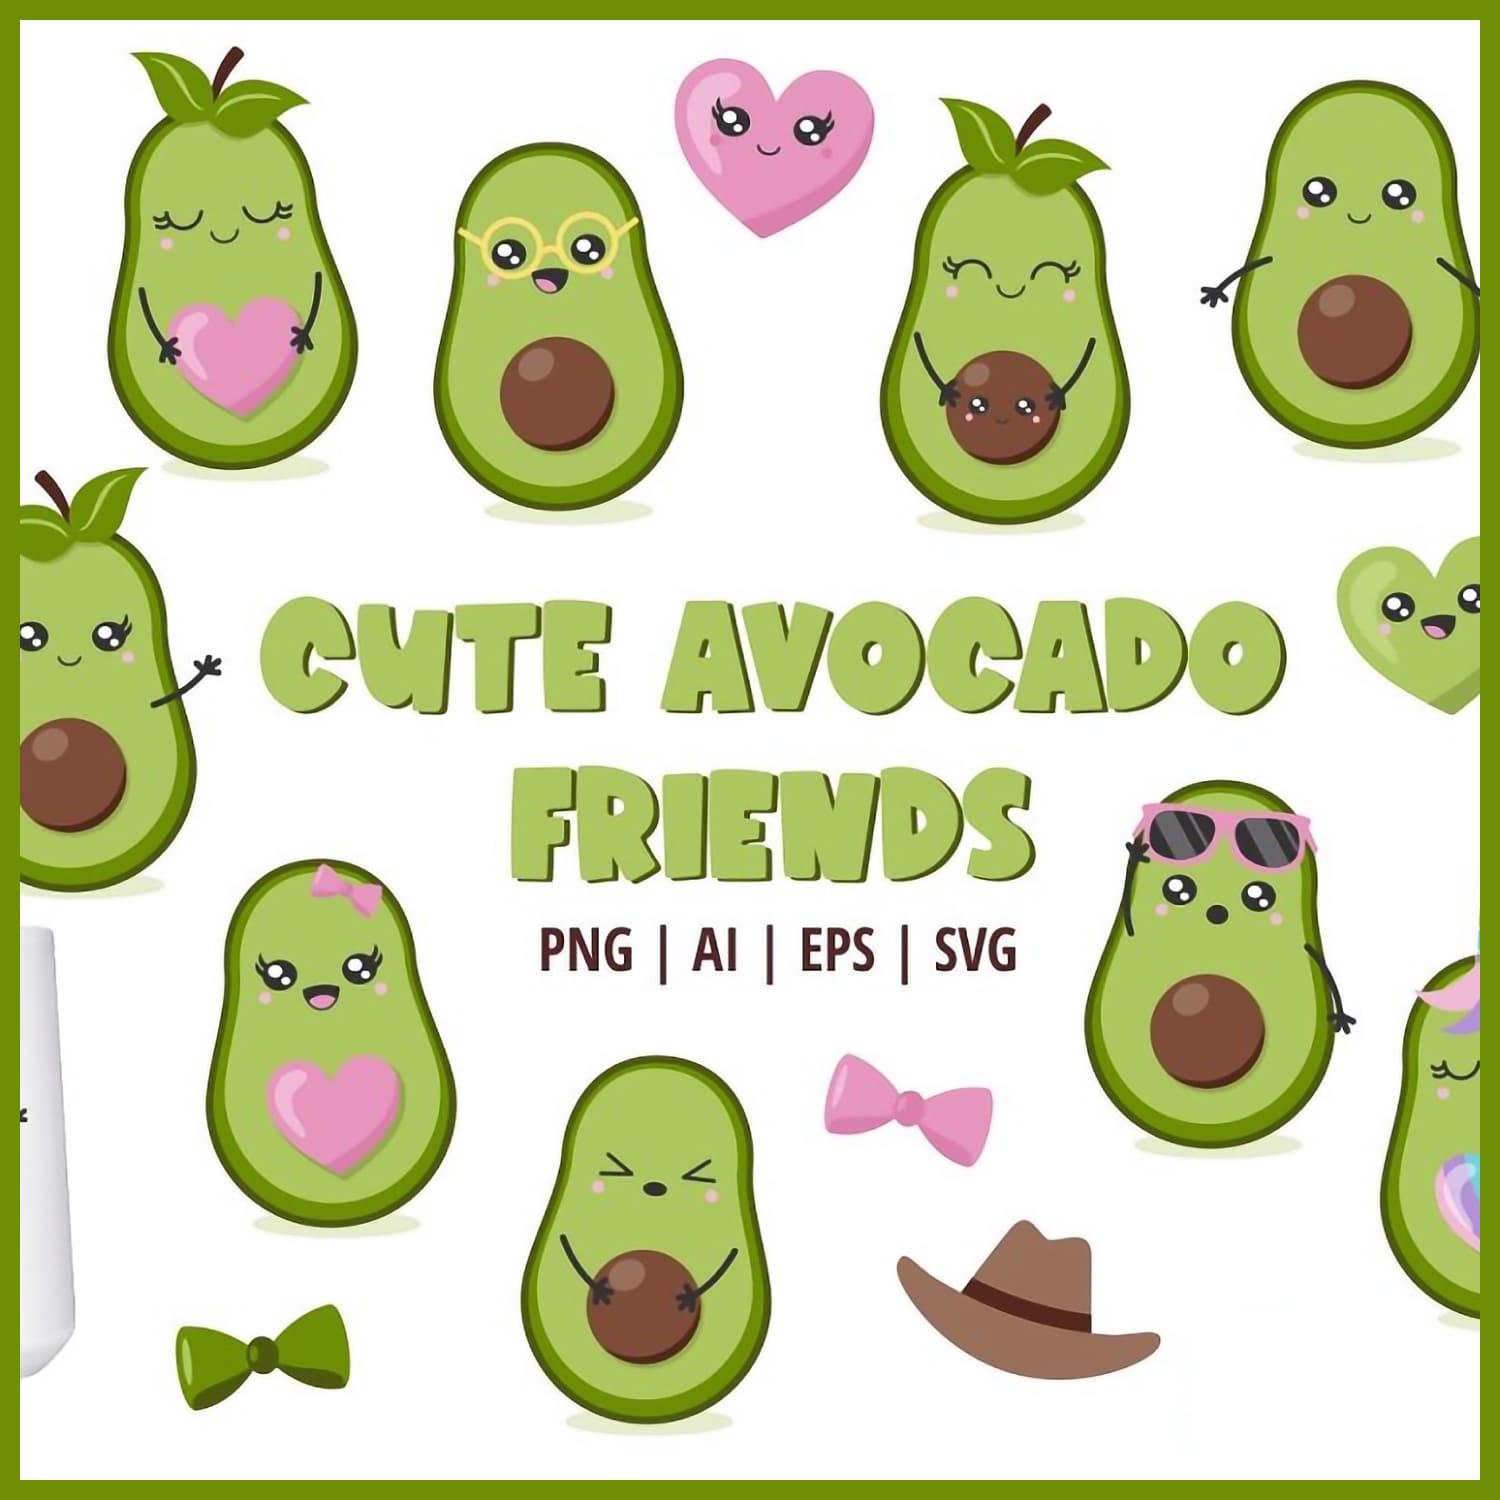 Cute avocado friends created by Huckleberry Hearts.